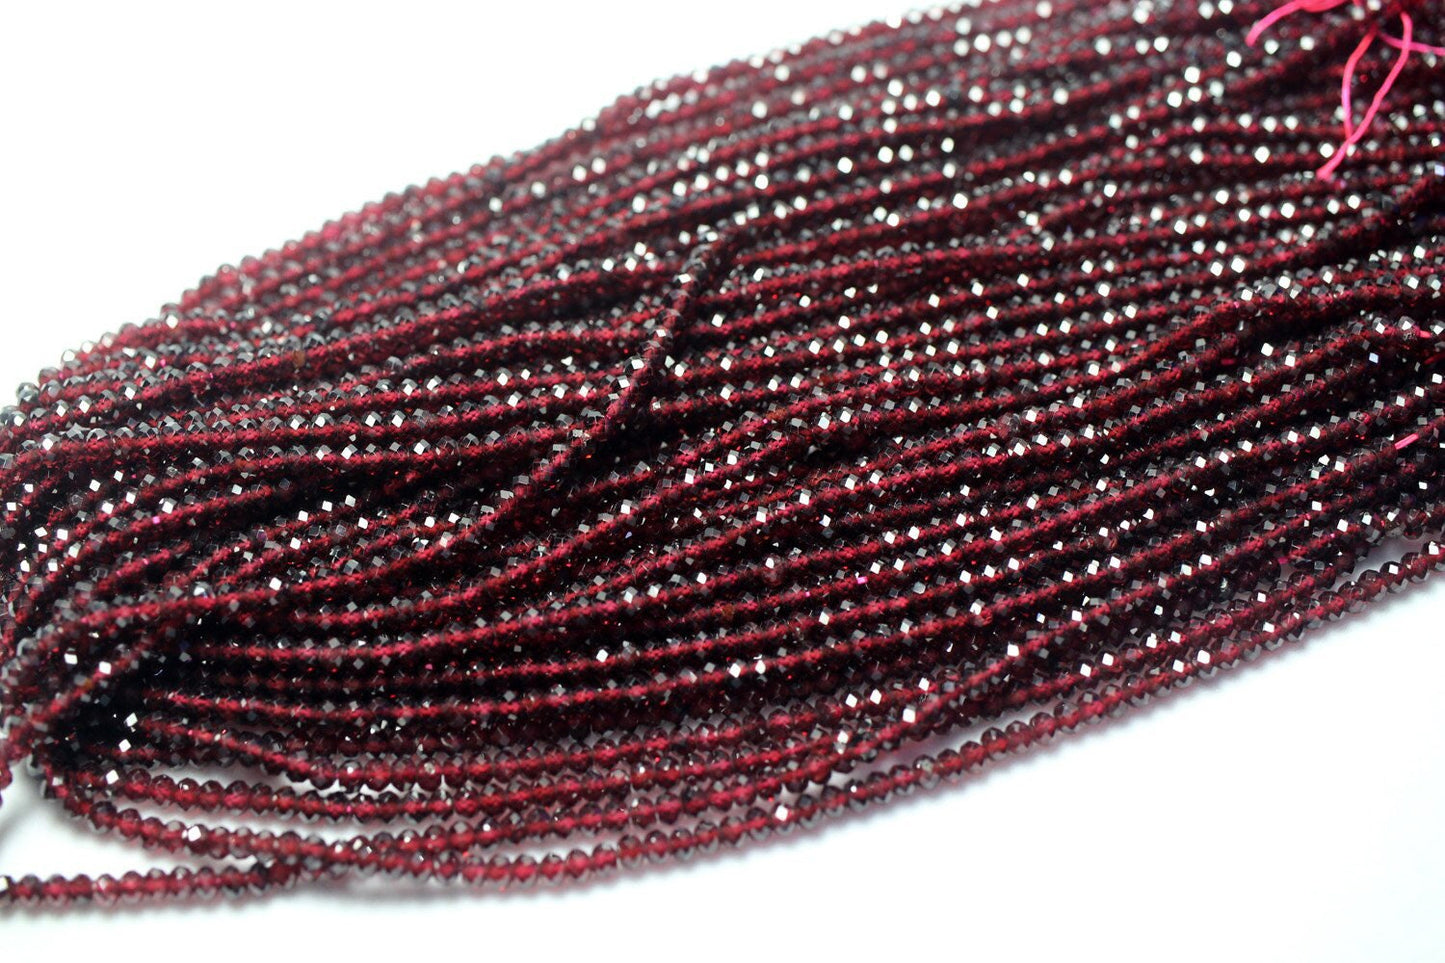 Genuine Garnet Rondelle Faceted Beads 2x3mm 3x4mm 15''